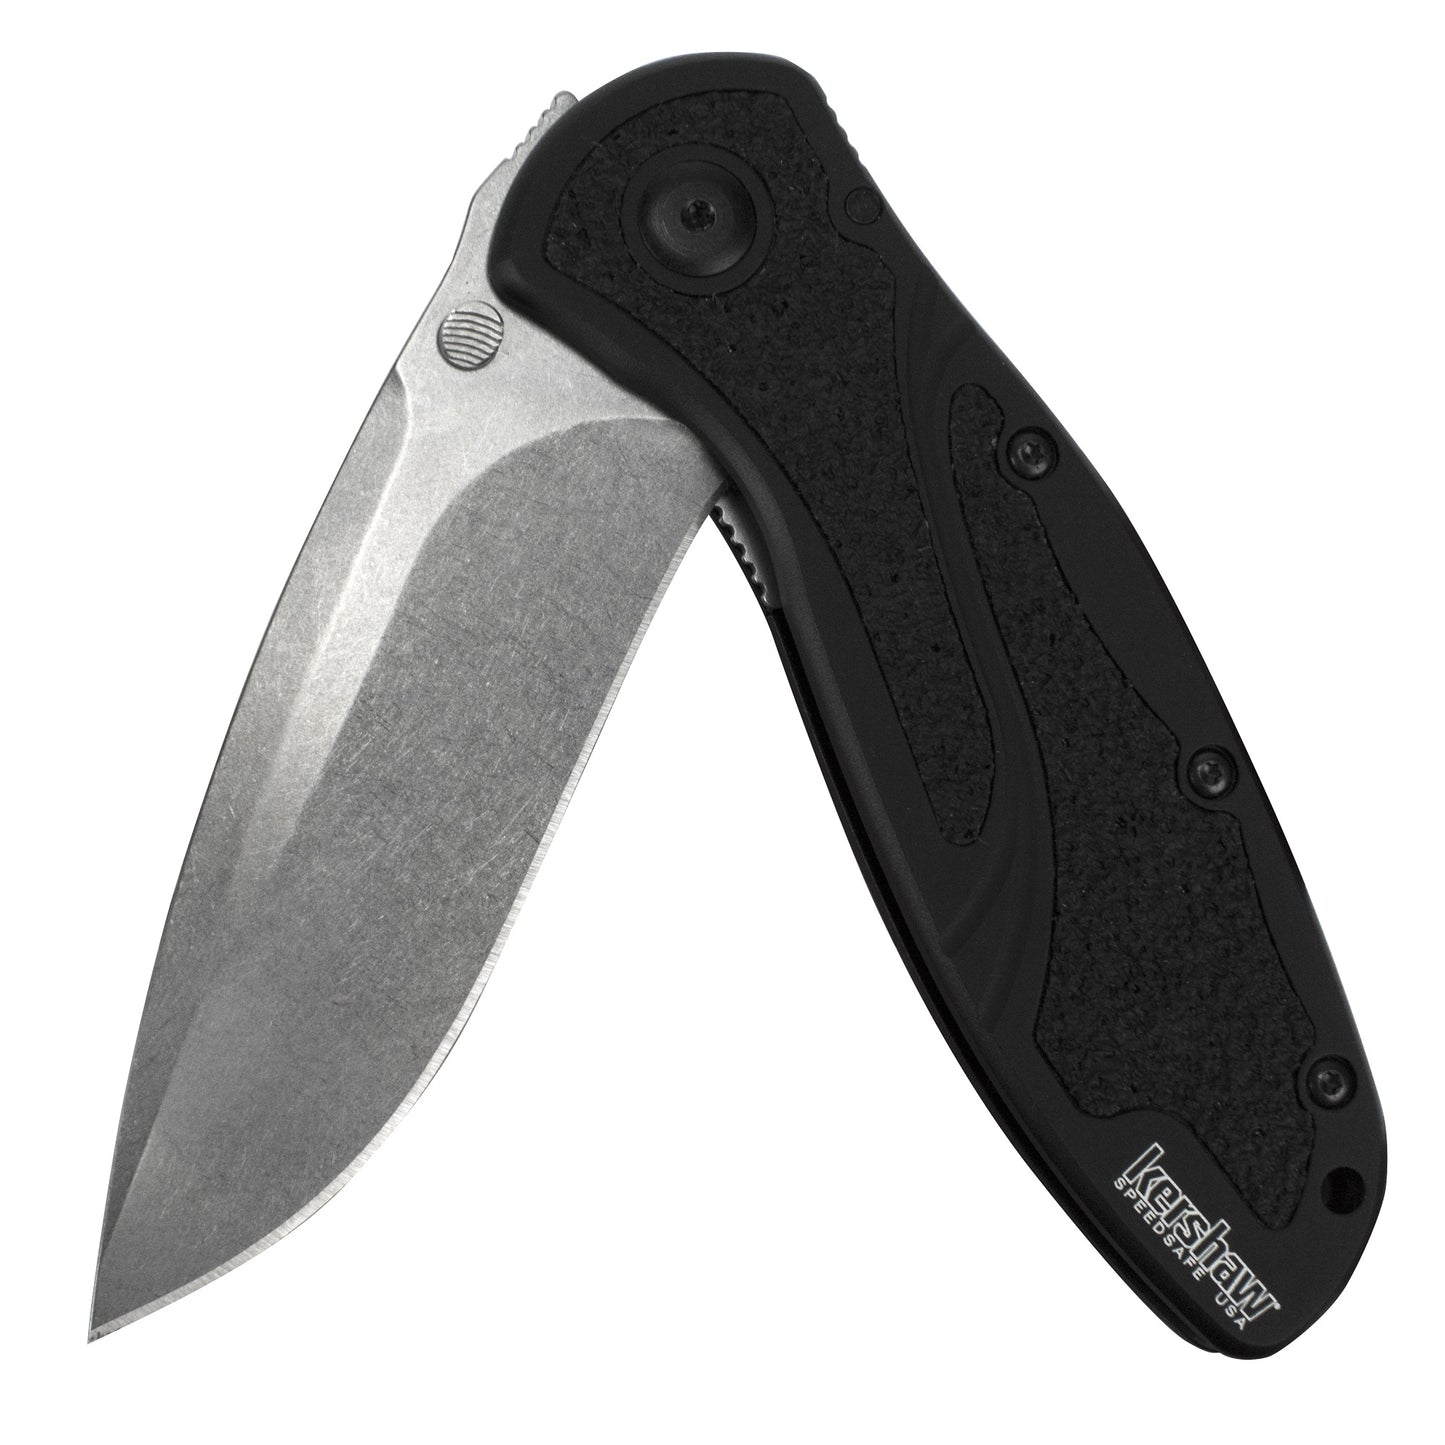 Kershaw Blur S30V Folding Pocket Knife (1670S30V); 3.4” S30V Blade with Stonewashed Finish and Aluminum Handle with Trac-Tec - SpeedSafe Assisted Opening, Reversible Pocketclip